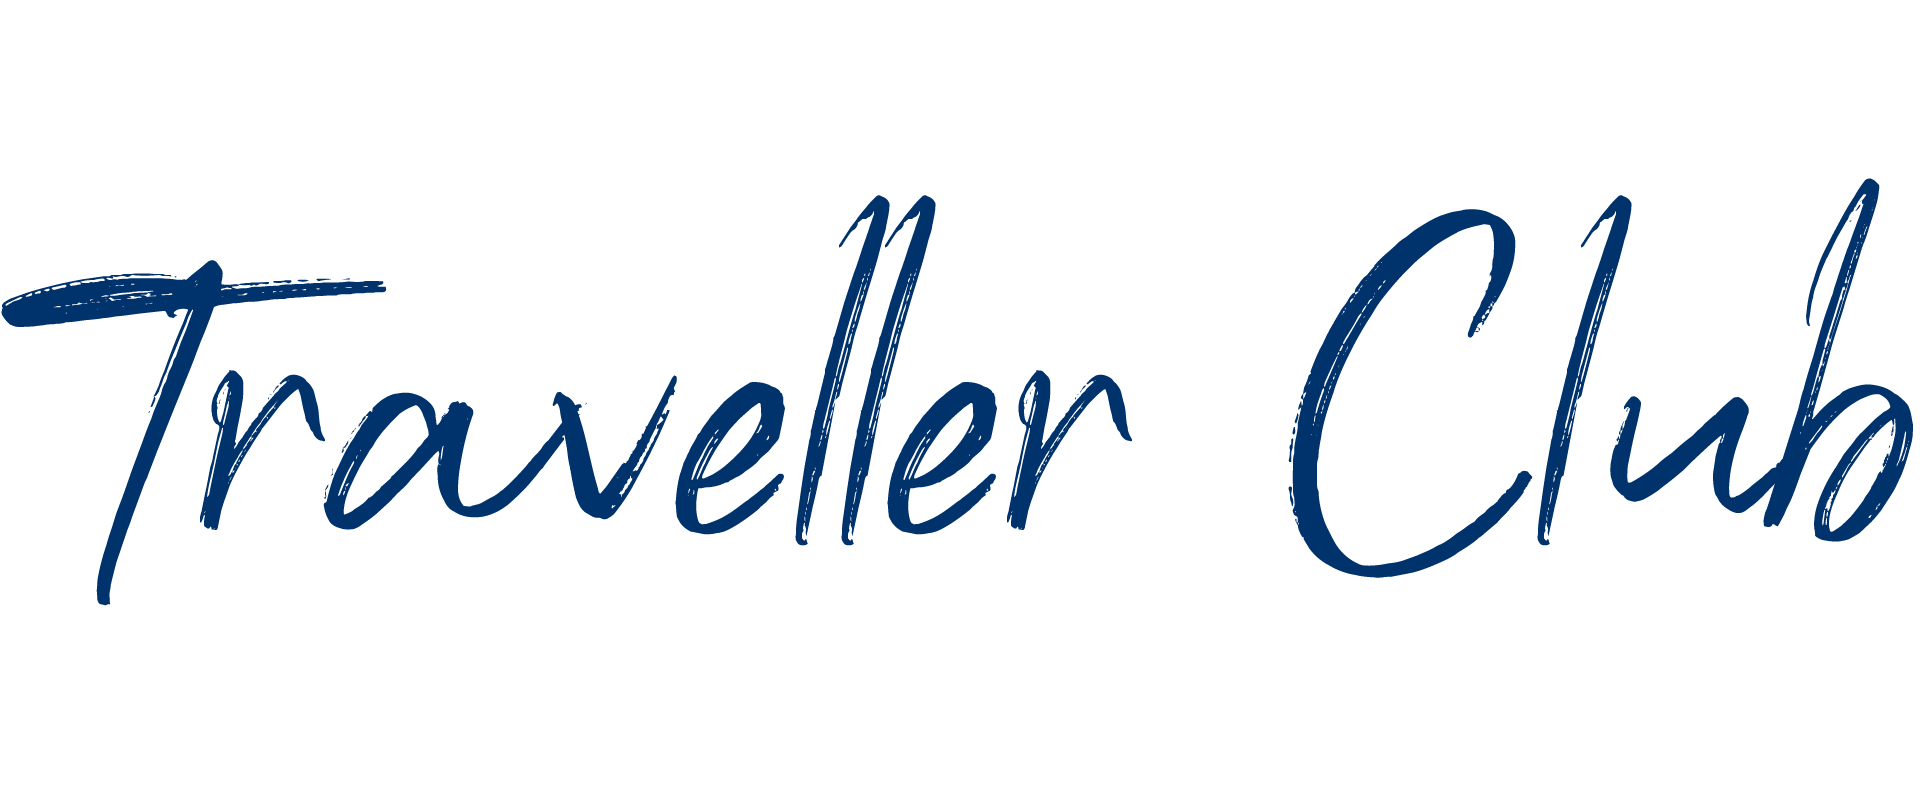 Traveller Club logo